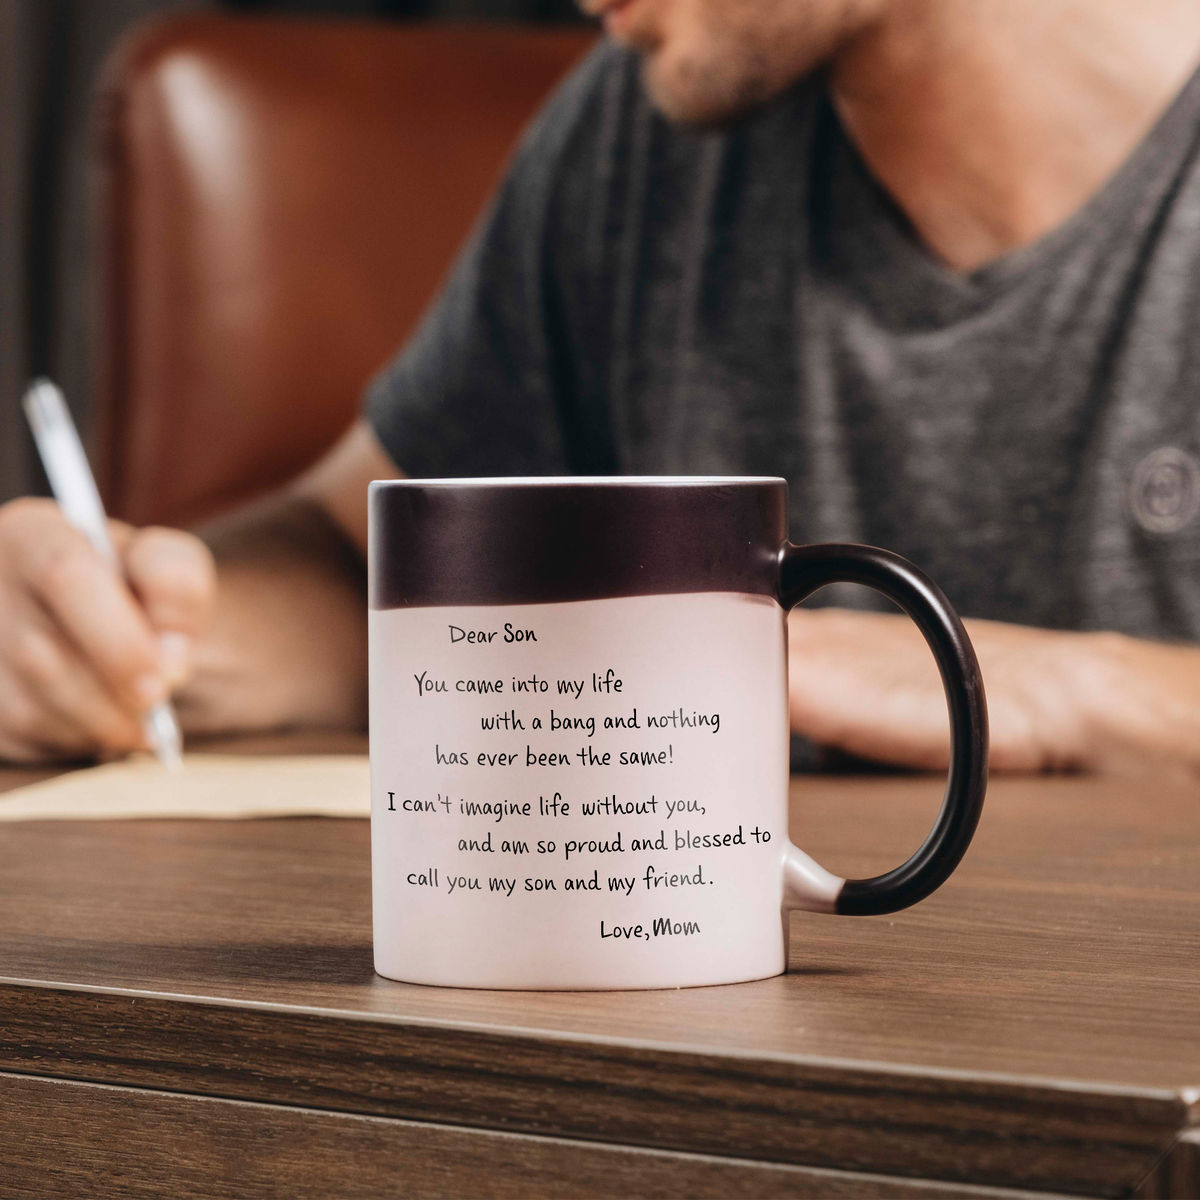 Secret Love Letter - Dear Son - Magic Mug